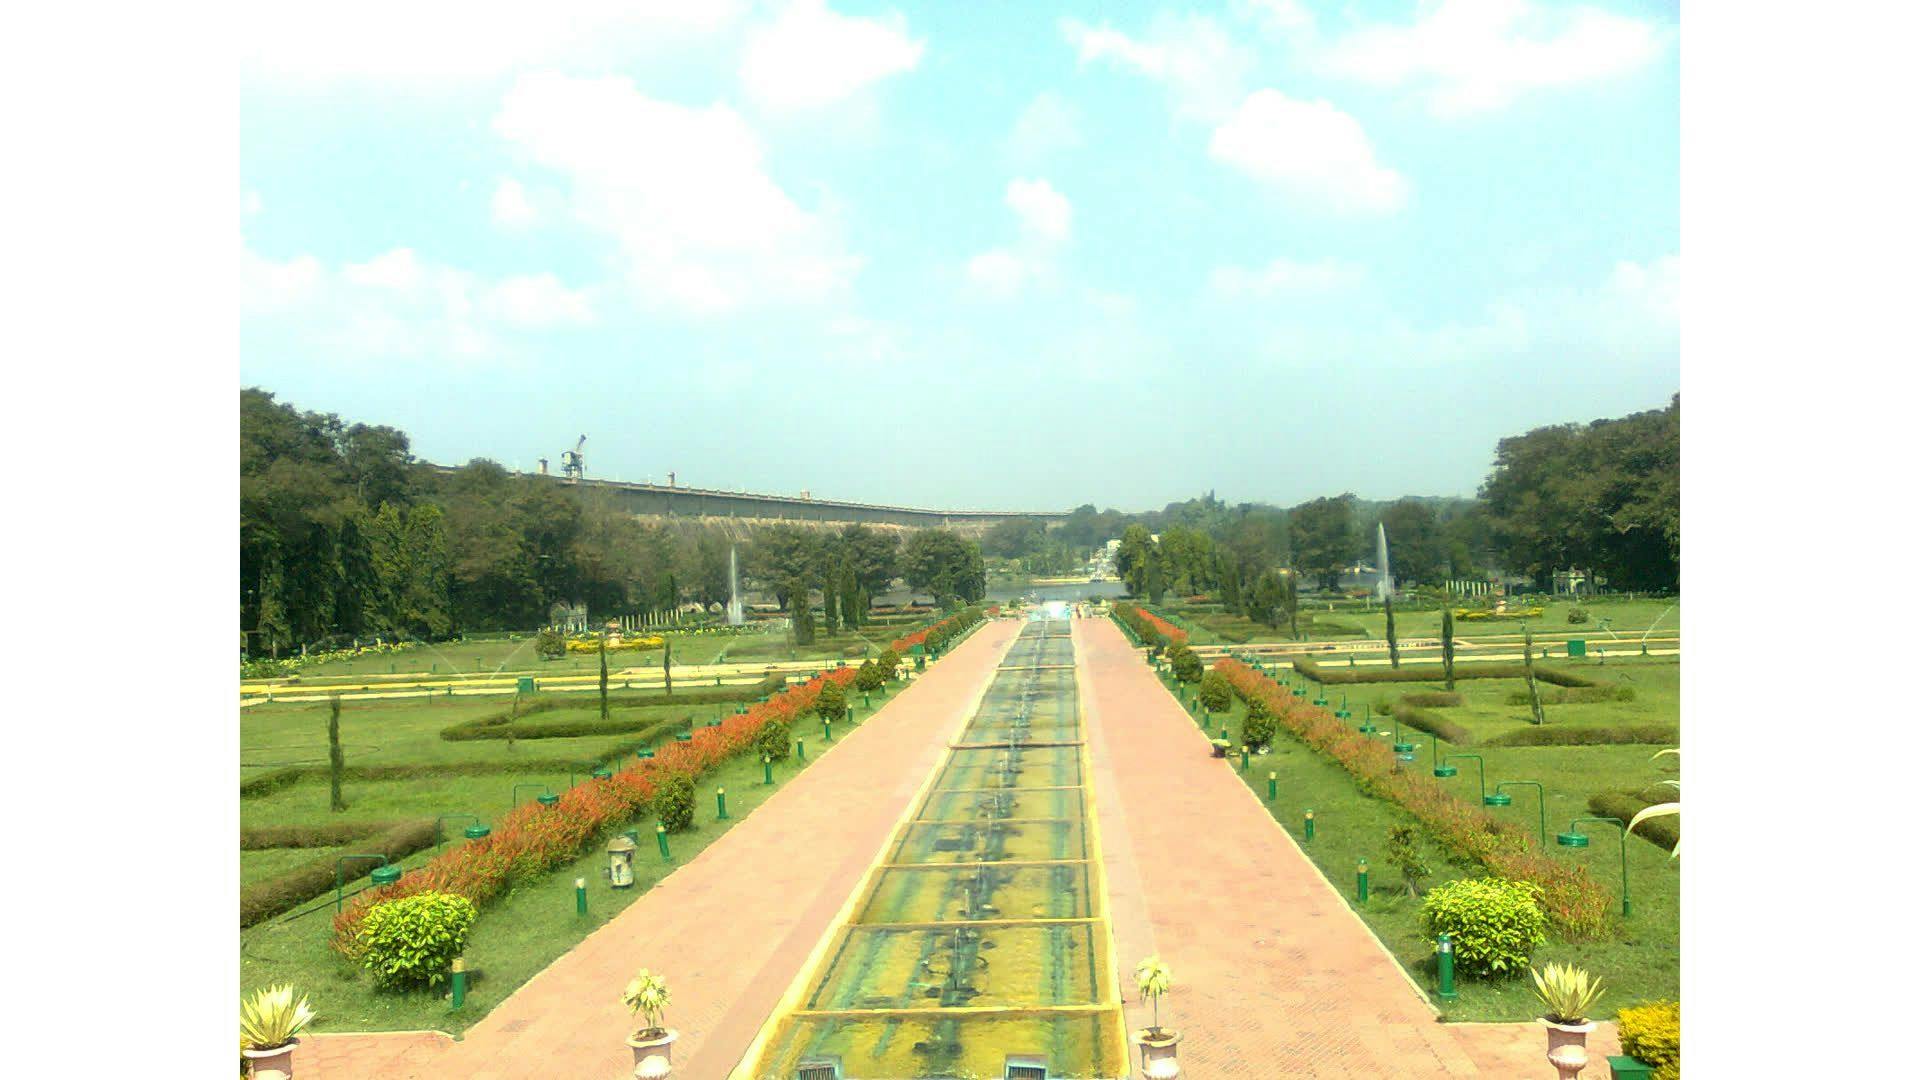 PP Yoonus Brindavan Gardens, Krishana Raja Sagara, Mysore | Wikimedia Commons